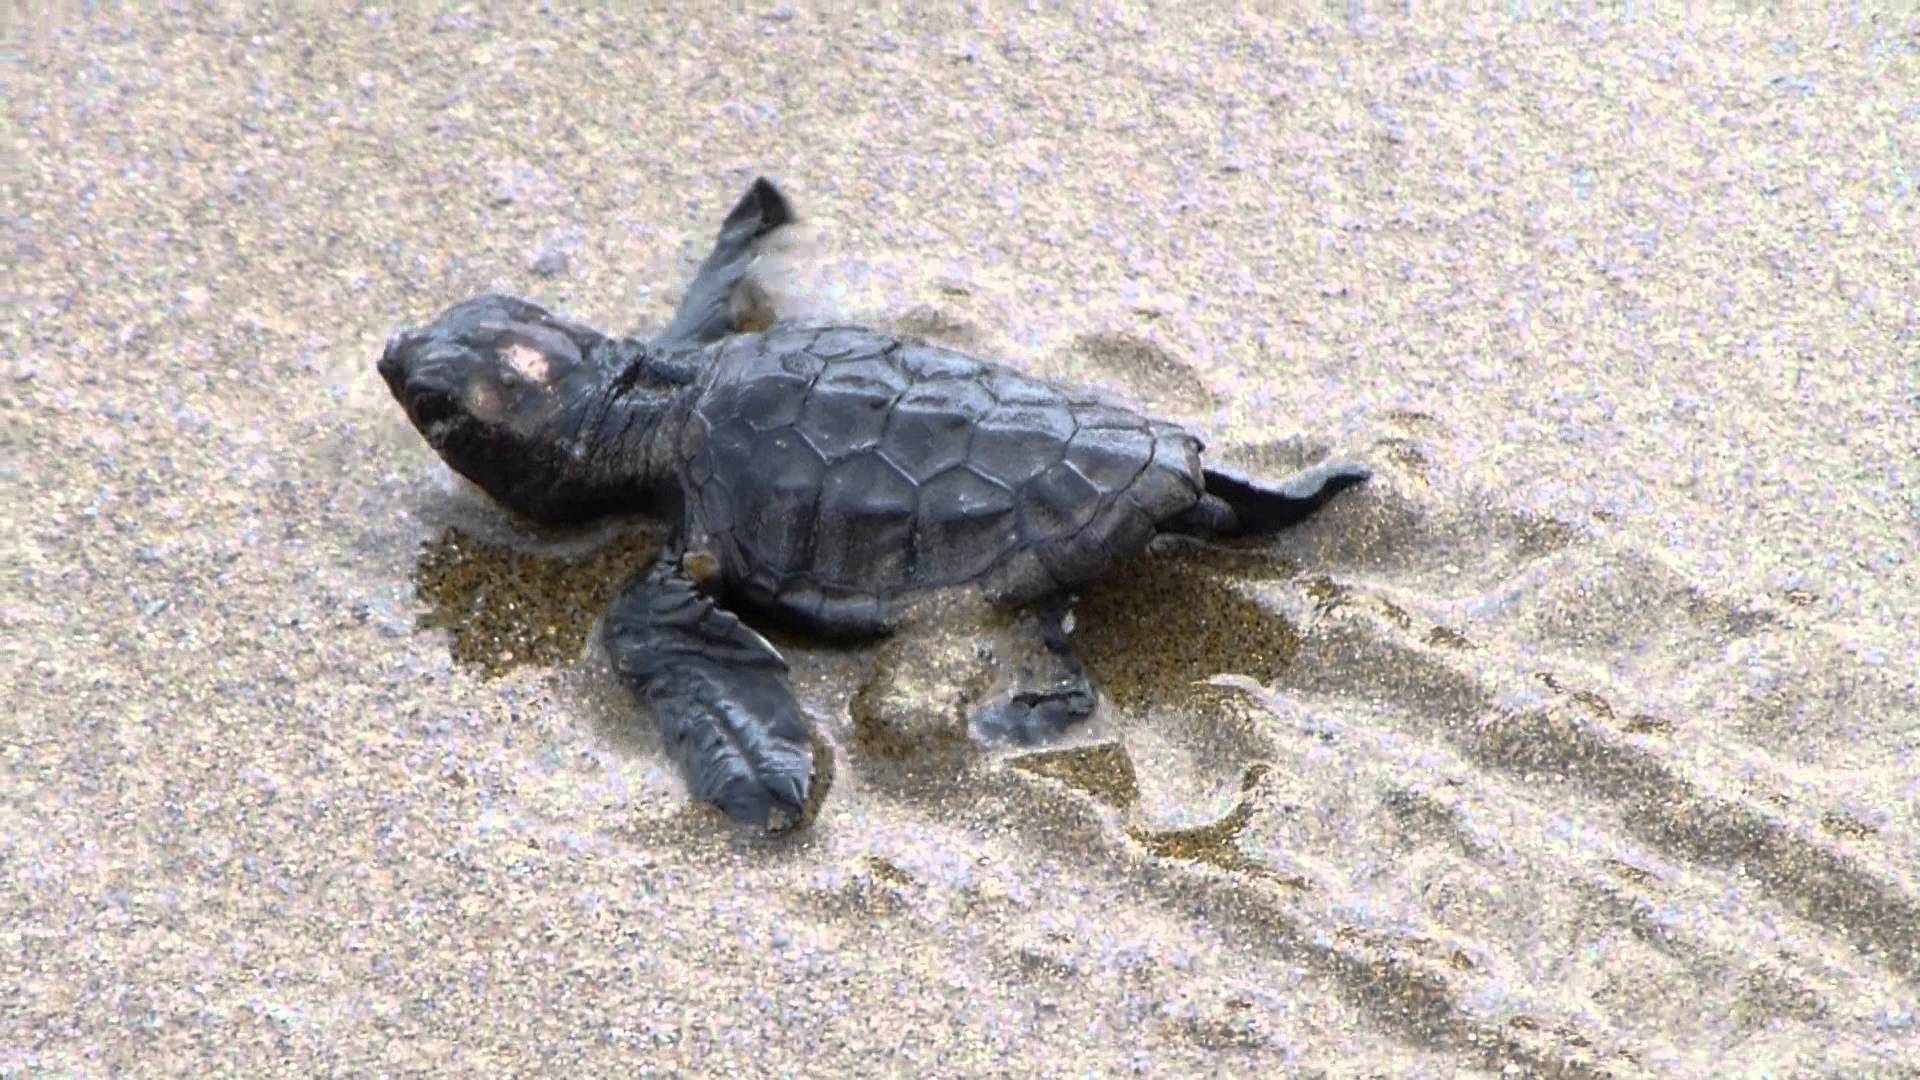 T turtle. Морская черепаха Архелон. Черепаха Каретта-Каретта. Древняя черепаха Архелон. Каретта-Каретта Турция черепаха Белек.